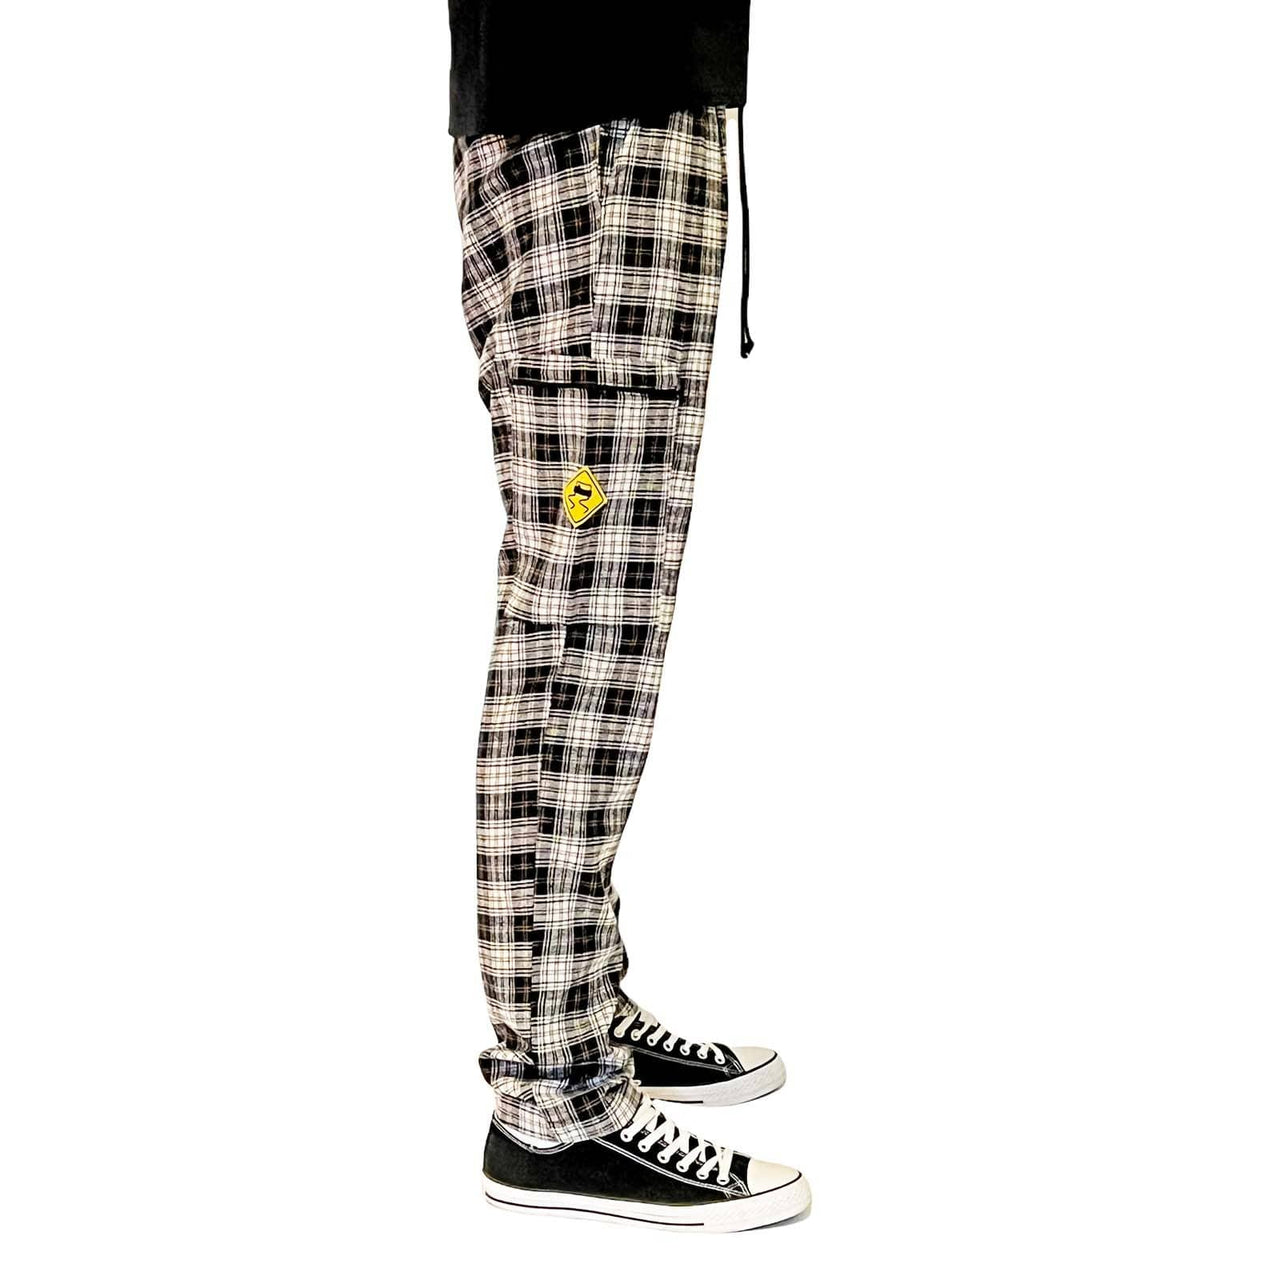 Skidz Pants Stash Pant - Black & White Tartan Flannel